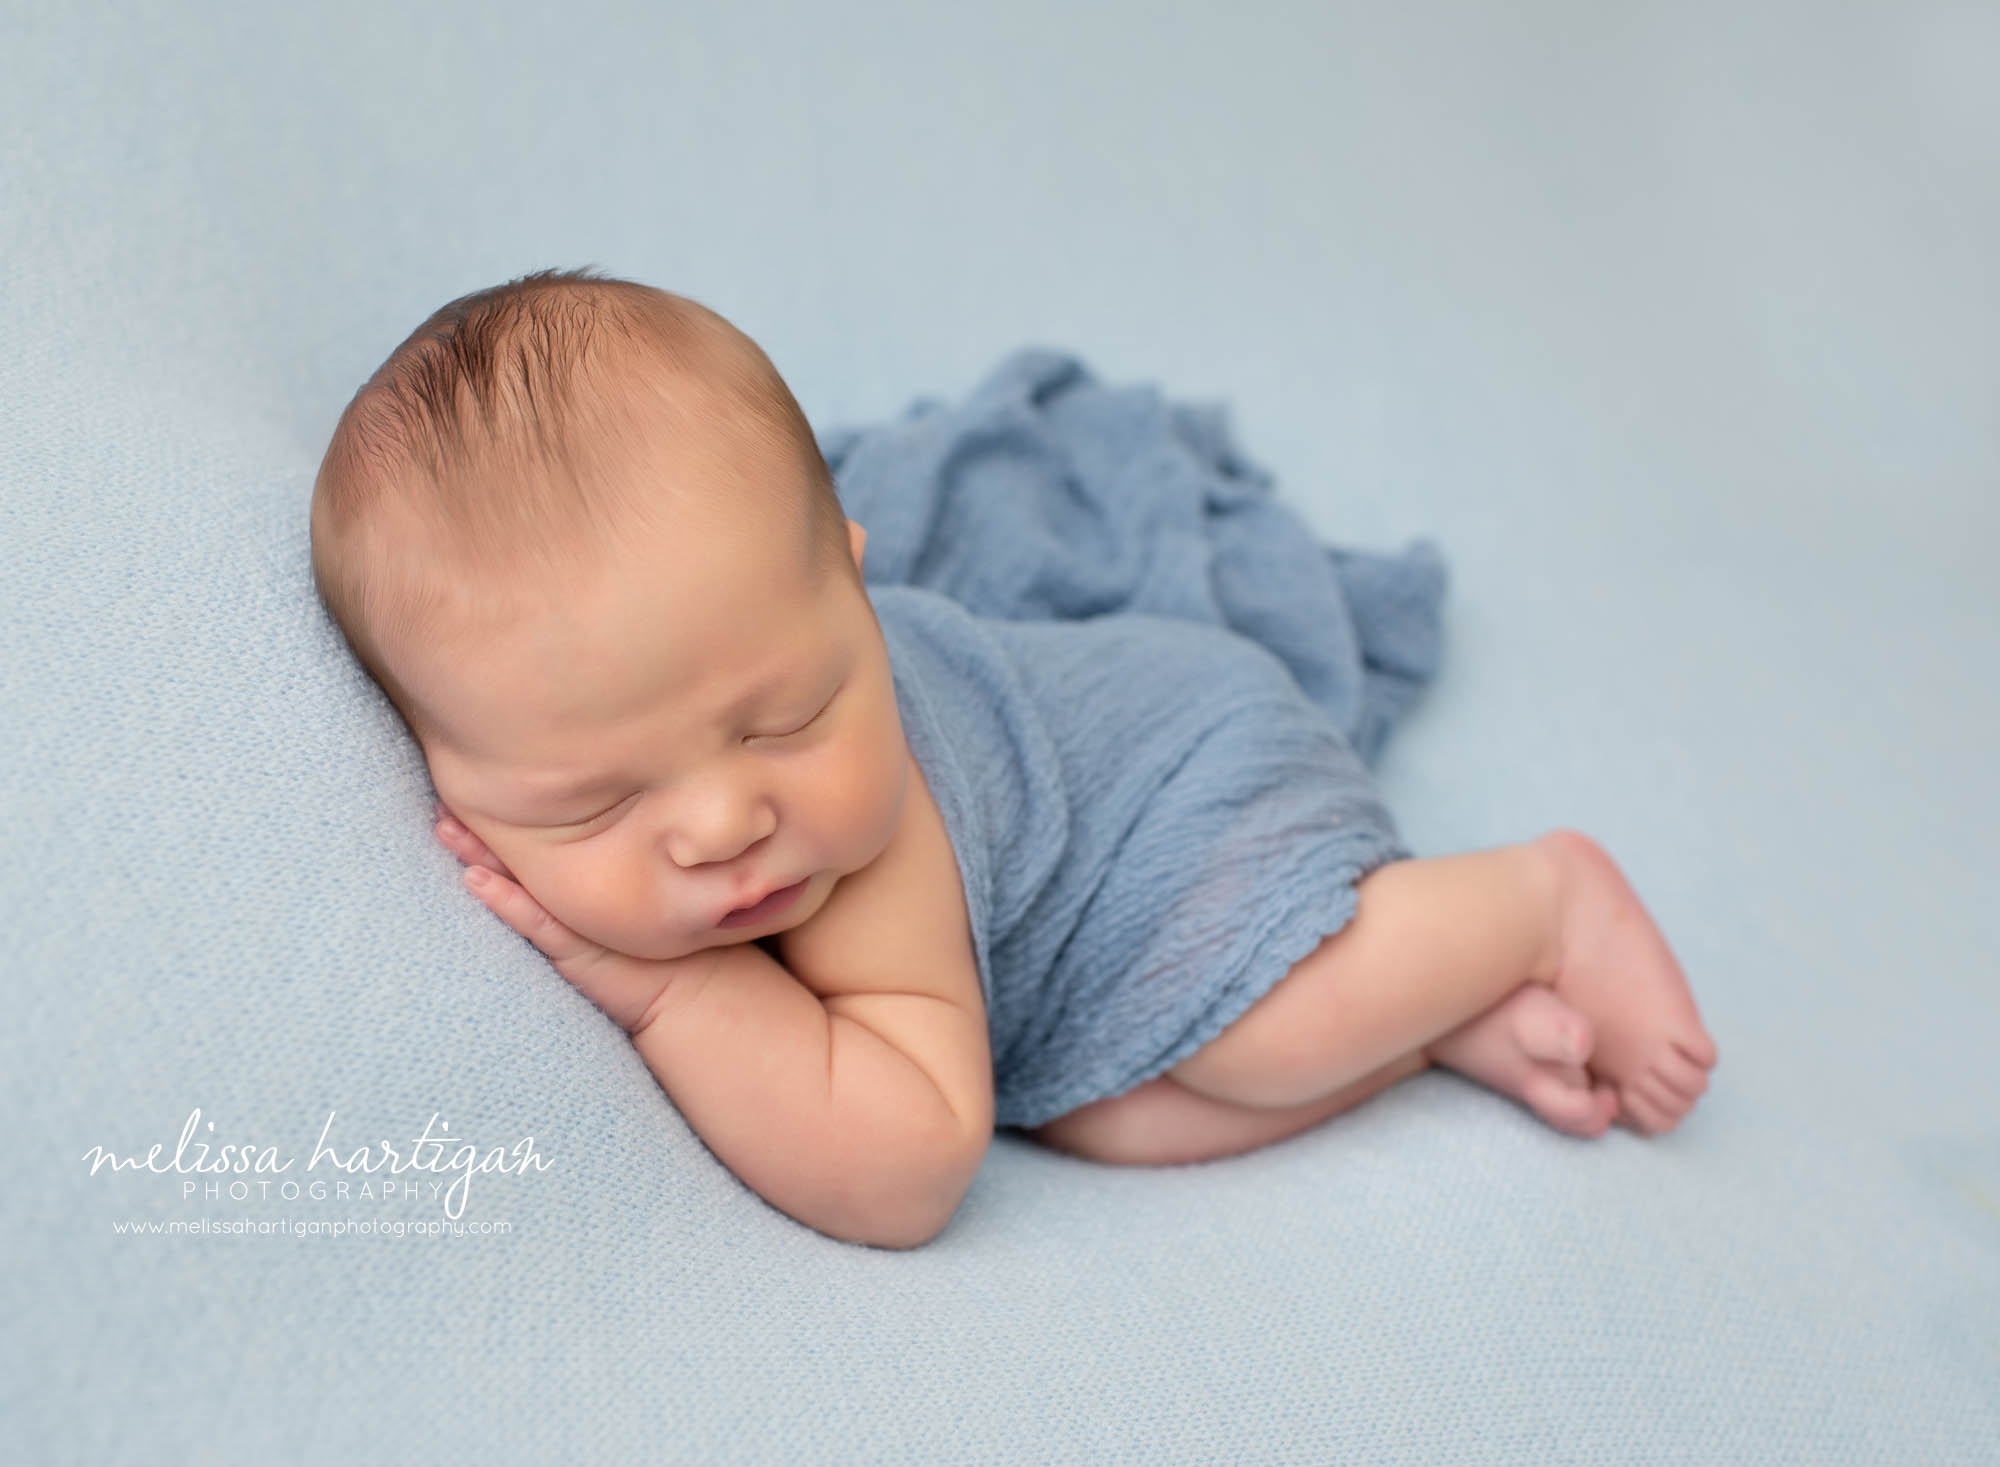 Newborn boy sleeping on side with blue wrap on light blue backdrop